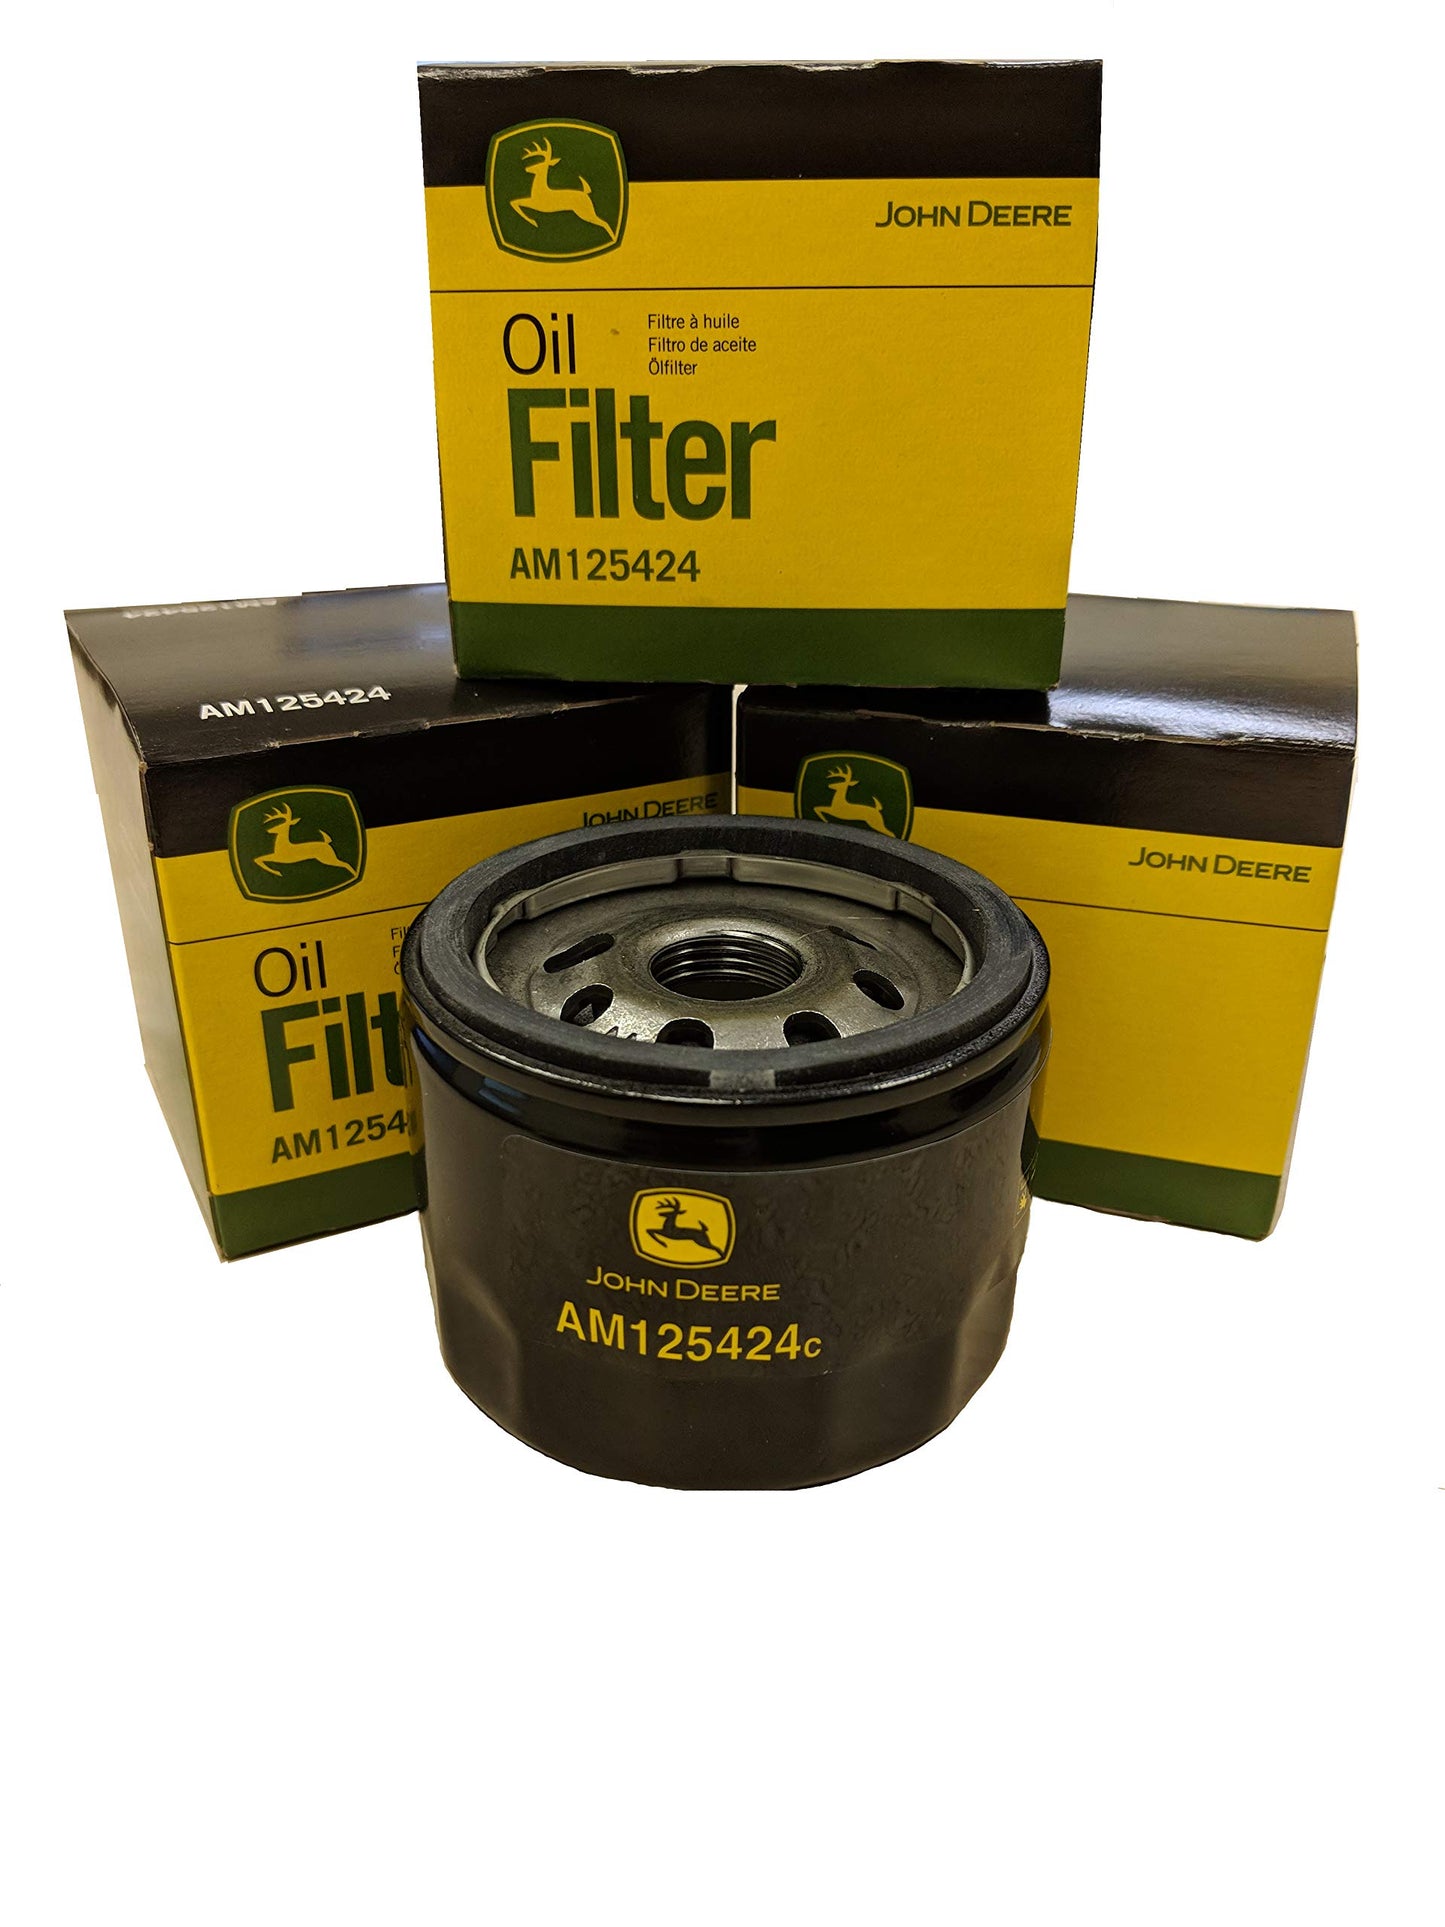 John Deere Original Equipment Package of Three Oil Filters - AM125424 (3)